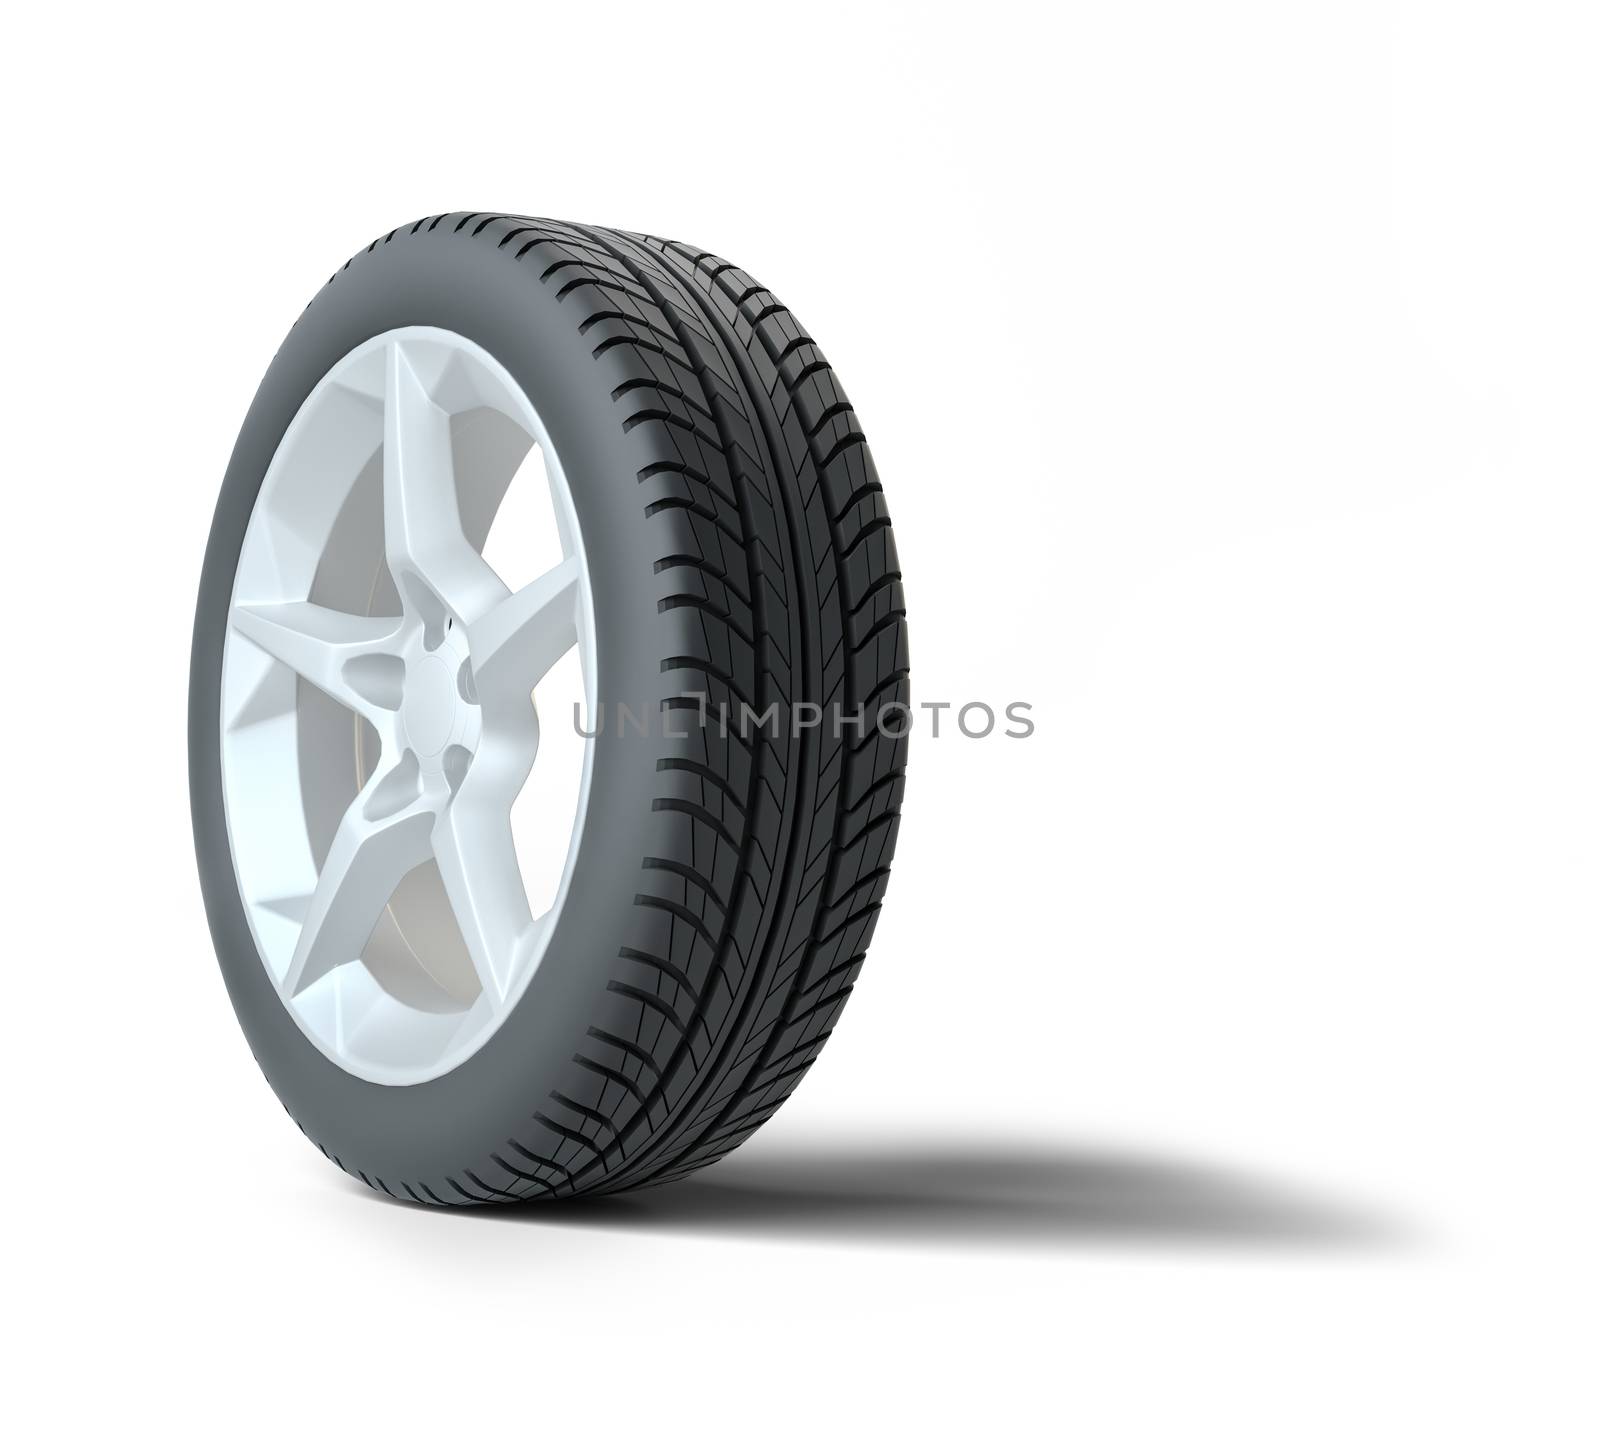 Car wheel isolated on white background. 3d illustration